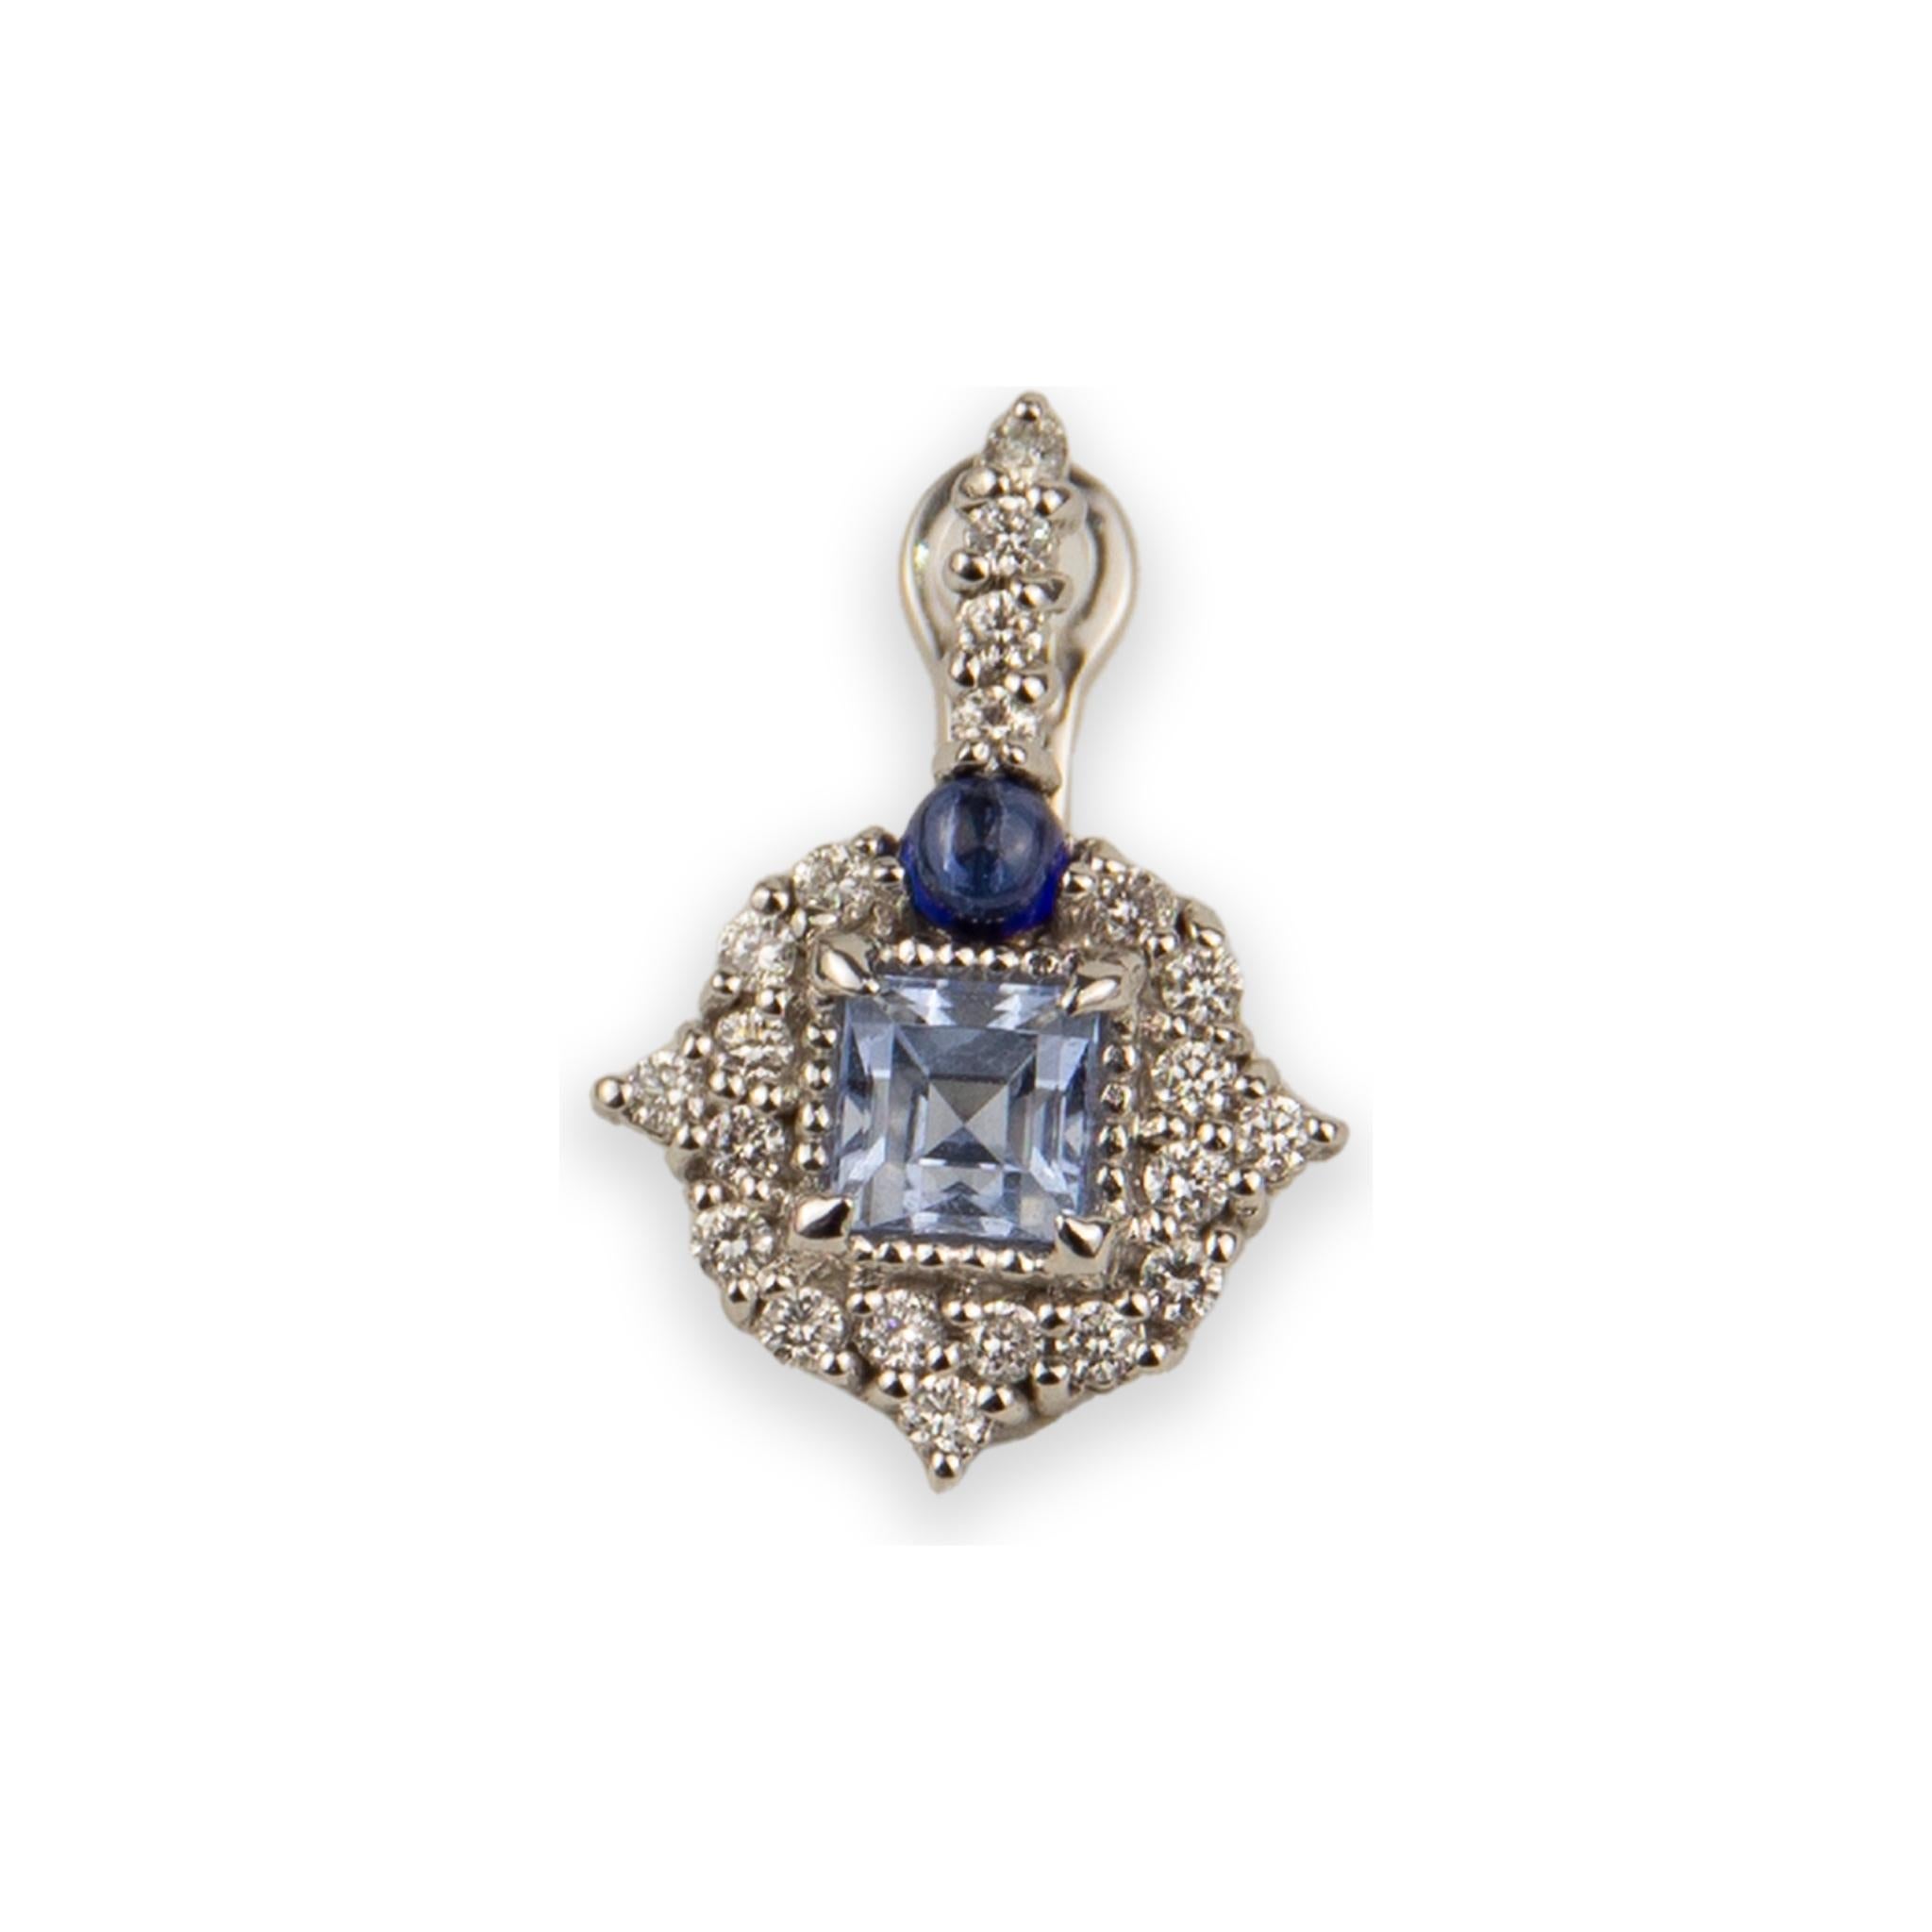 Judith Ripka 18K White Gold Earrings
Diamond&Quartz&Sapphire
Diamonds: 0.63ctw
Quartz: 0.88ctw
Sapphire: 0.46ctw
SKU: JR01055
Retail price: $3,840.00